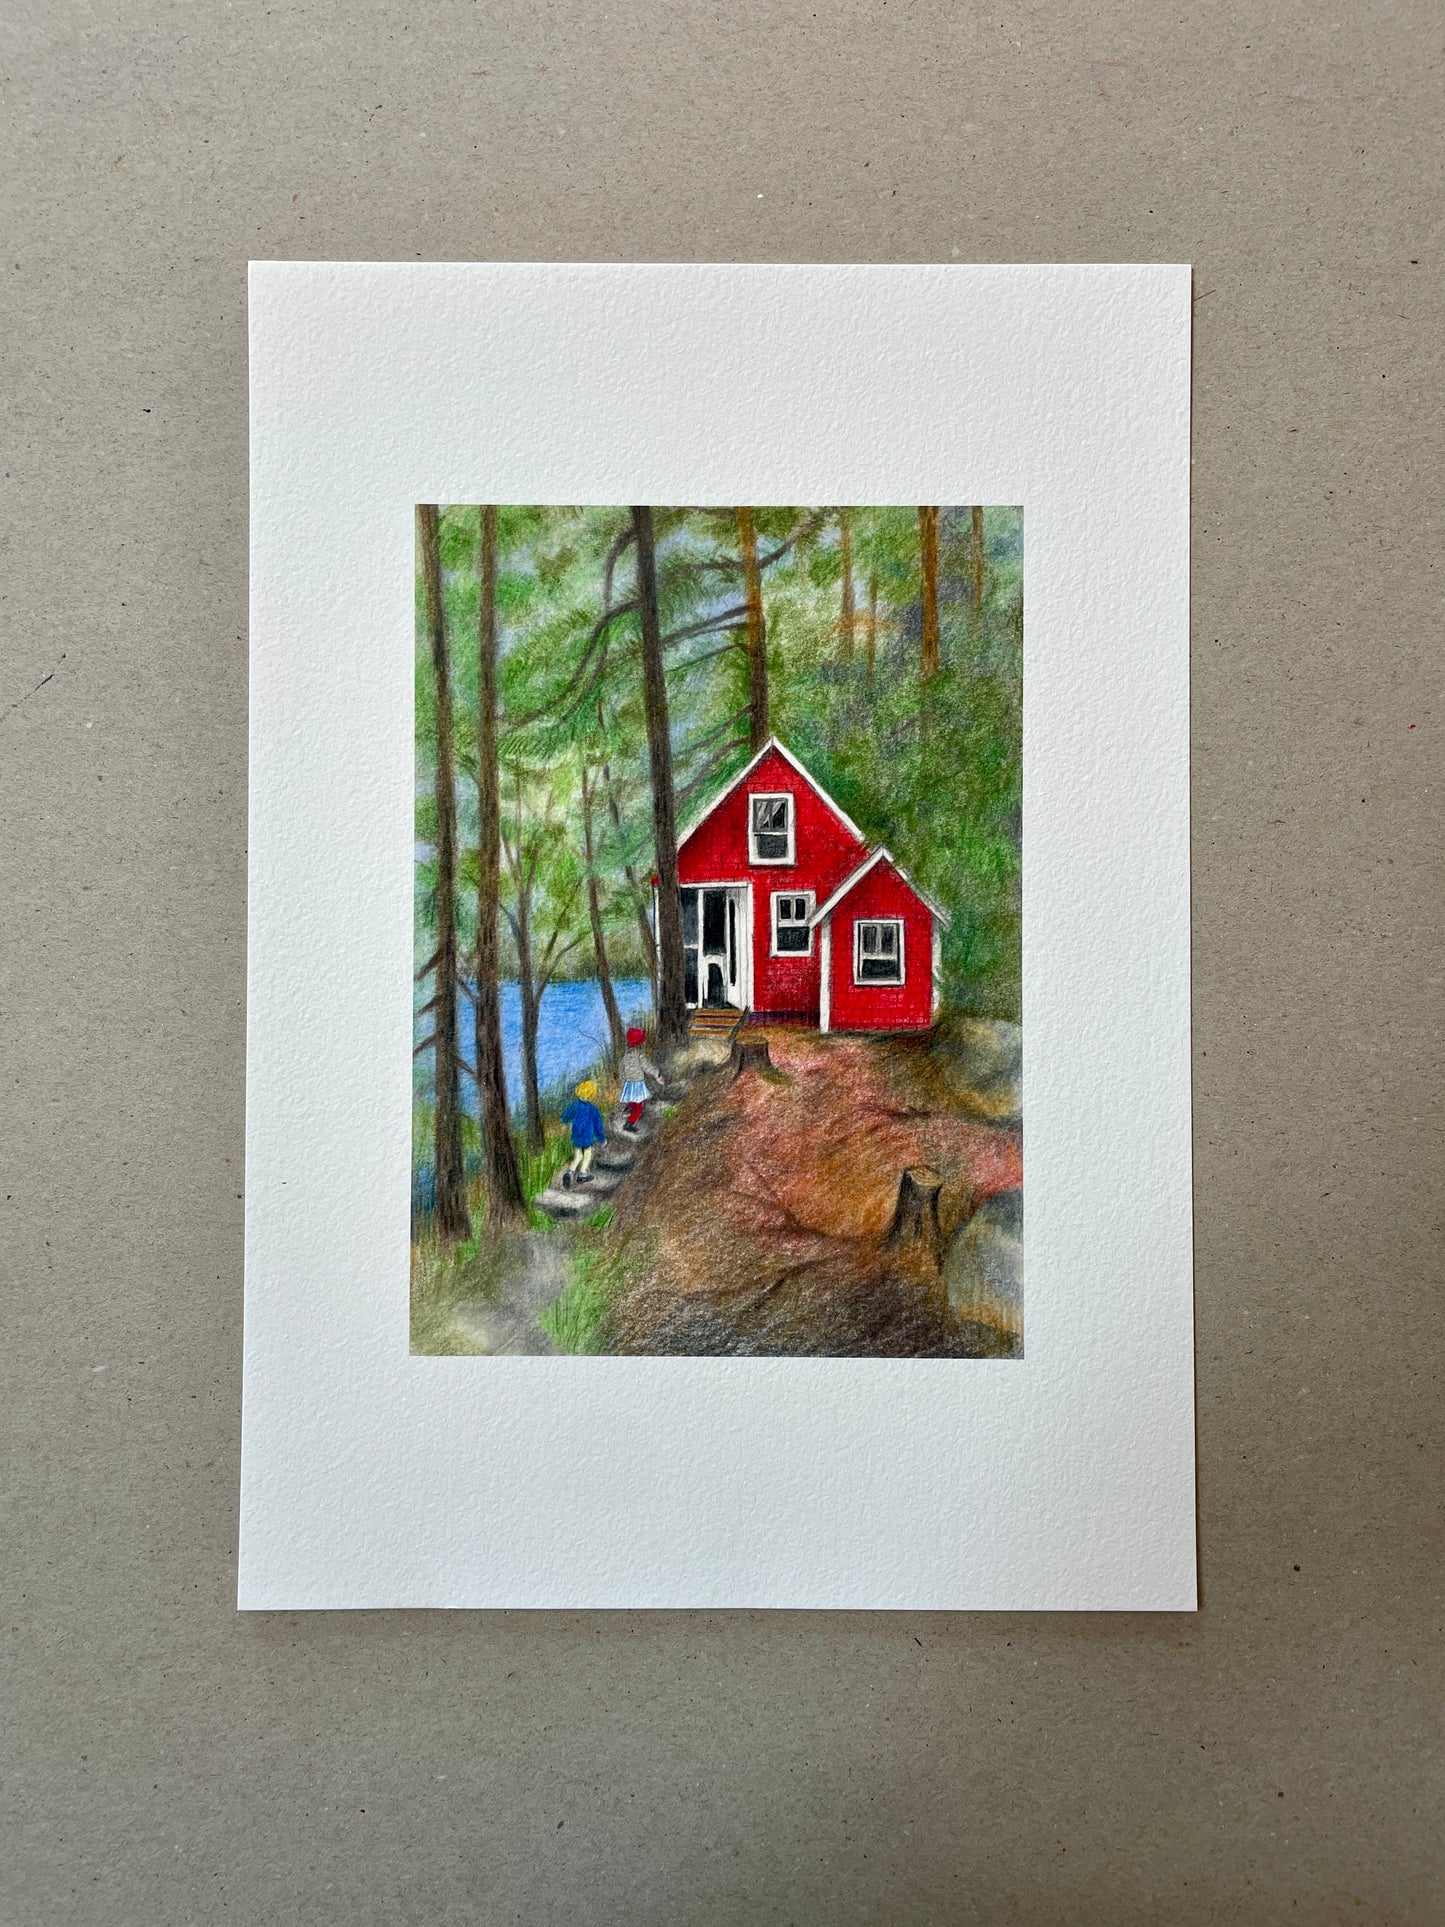 A4 Kunstdruck "Rotes Haus" ohne Rahmen